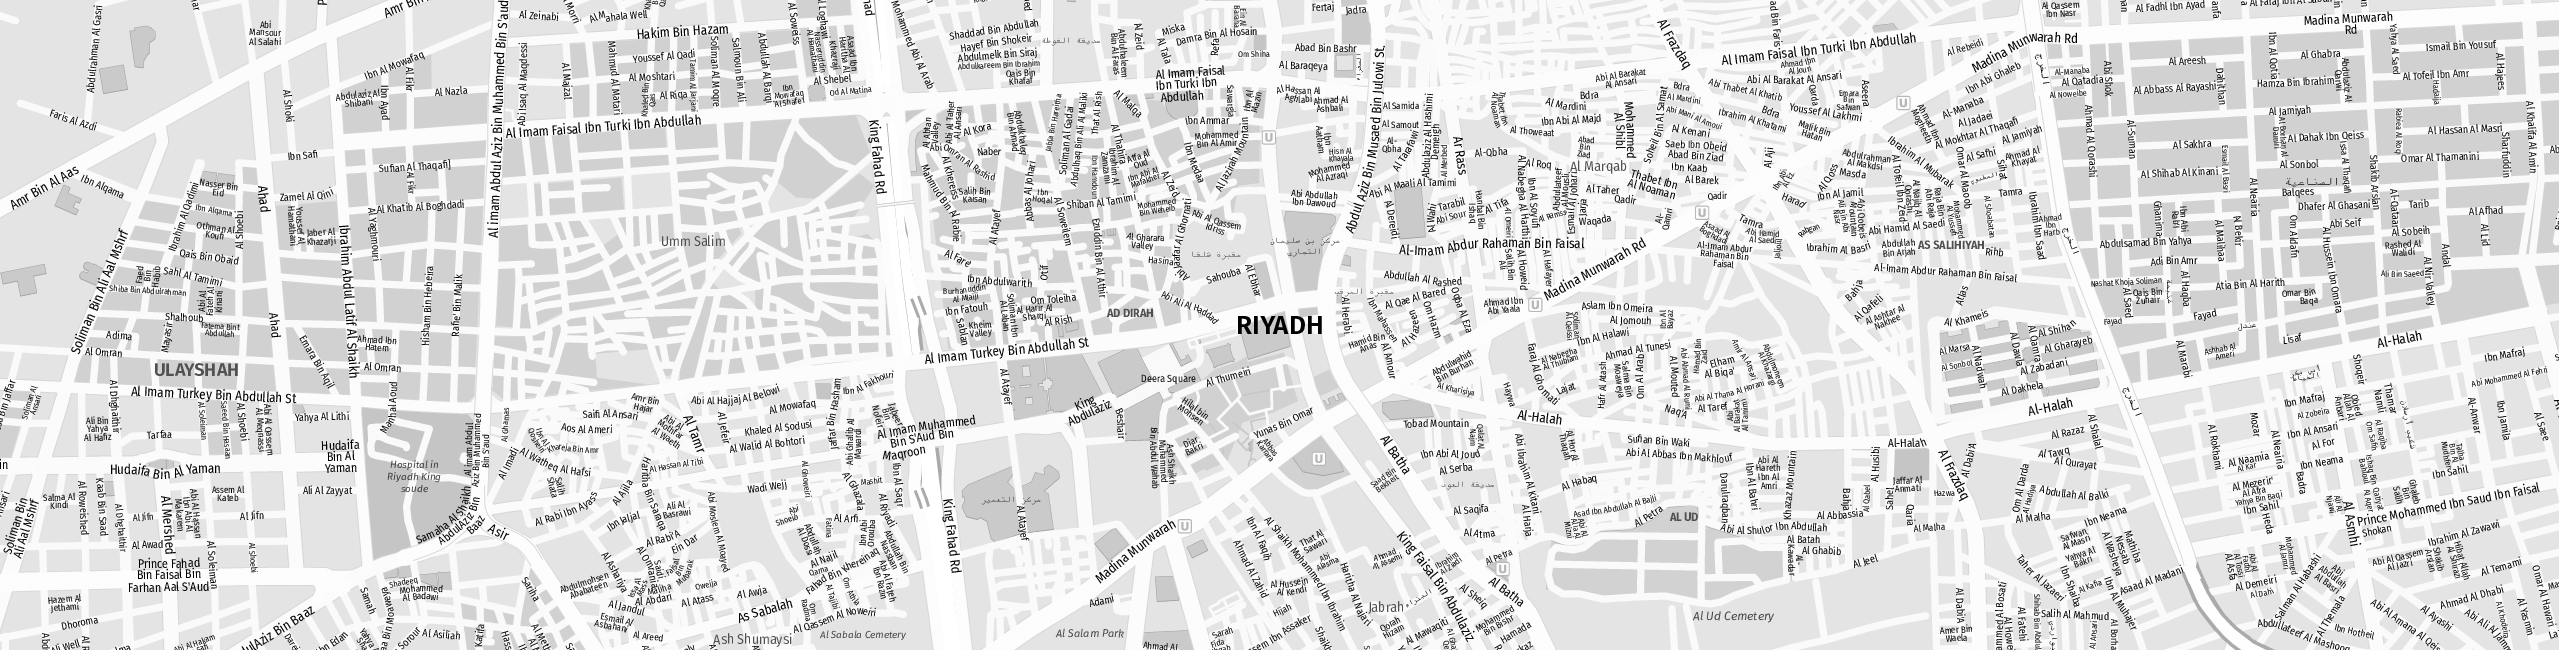 Stadtplan Riad zum Downloaden.